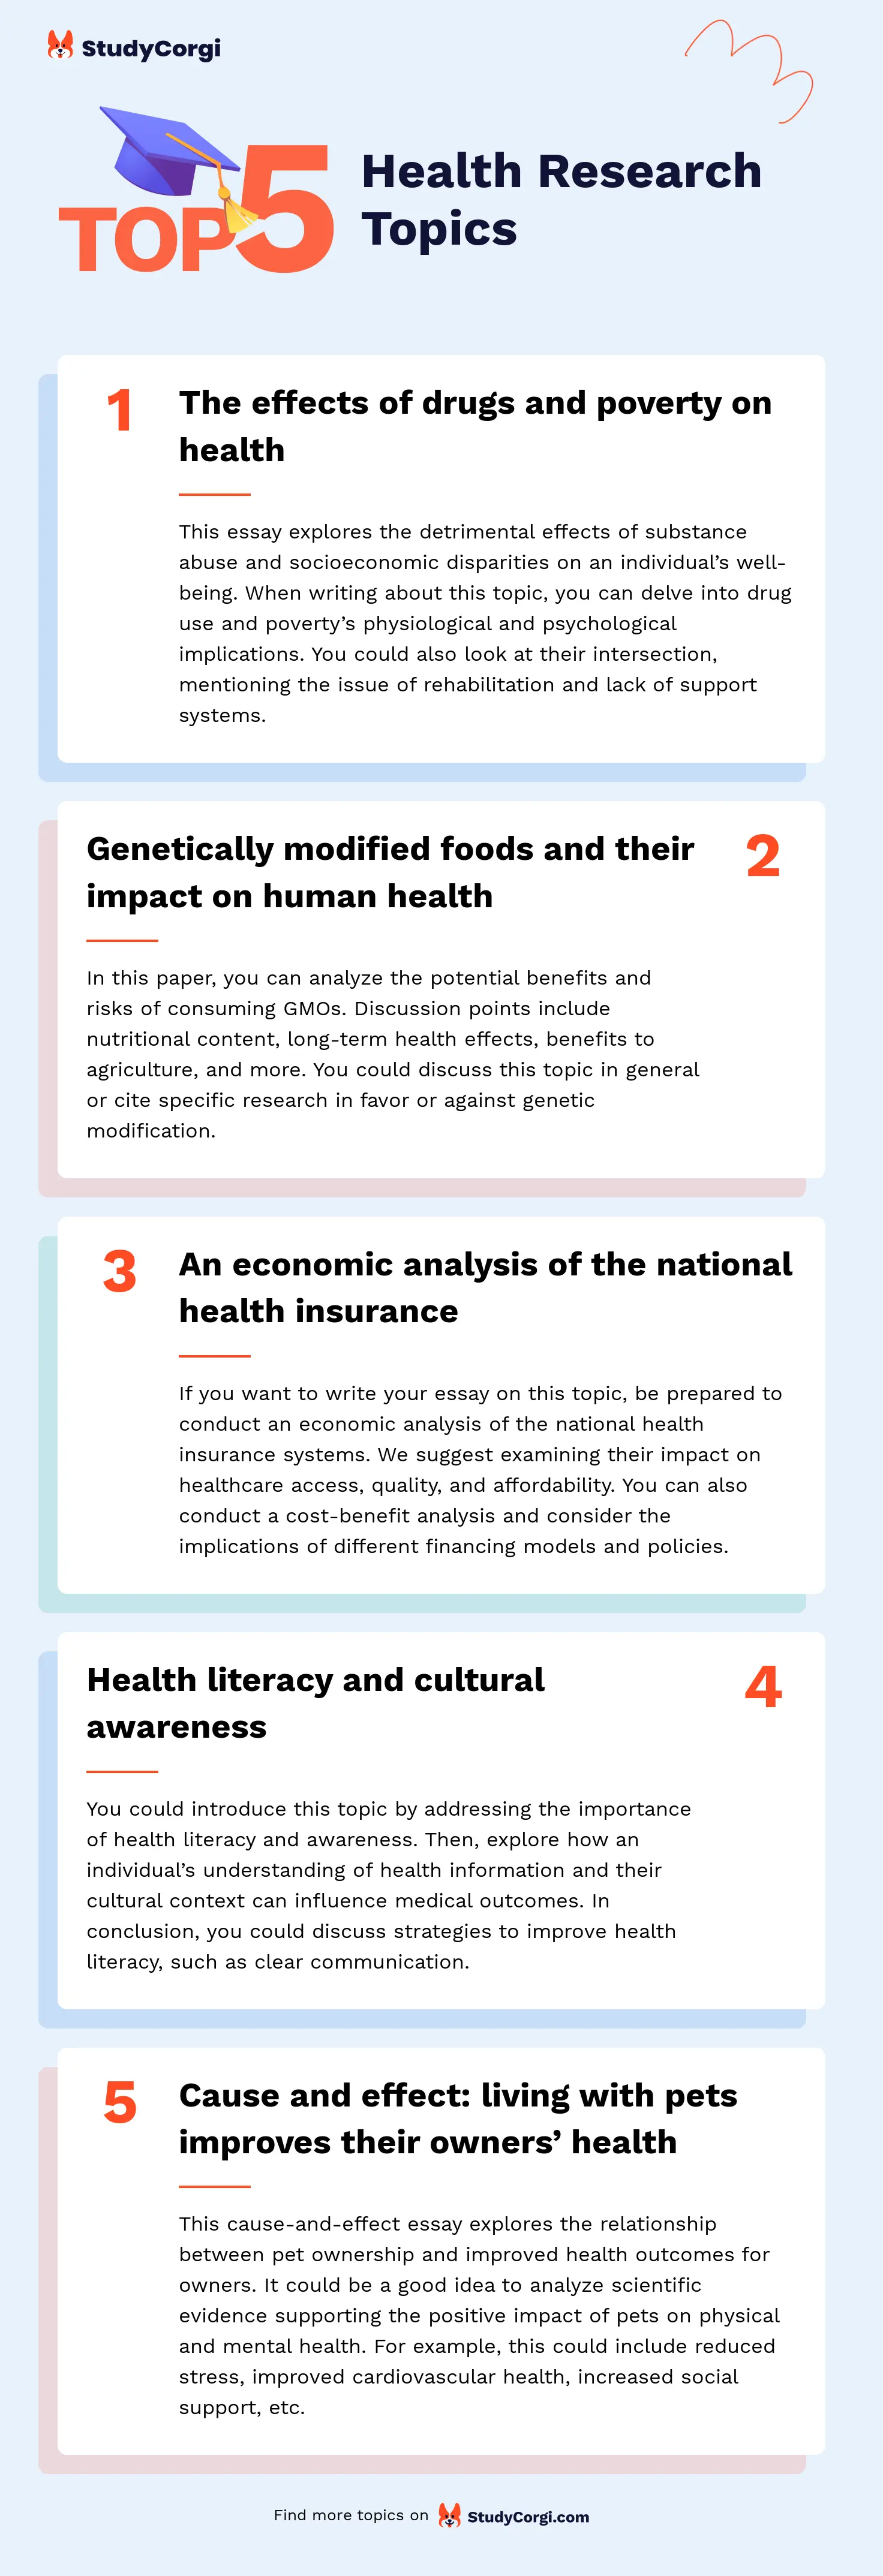 TOP-5 Health Research Topics